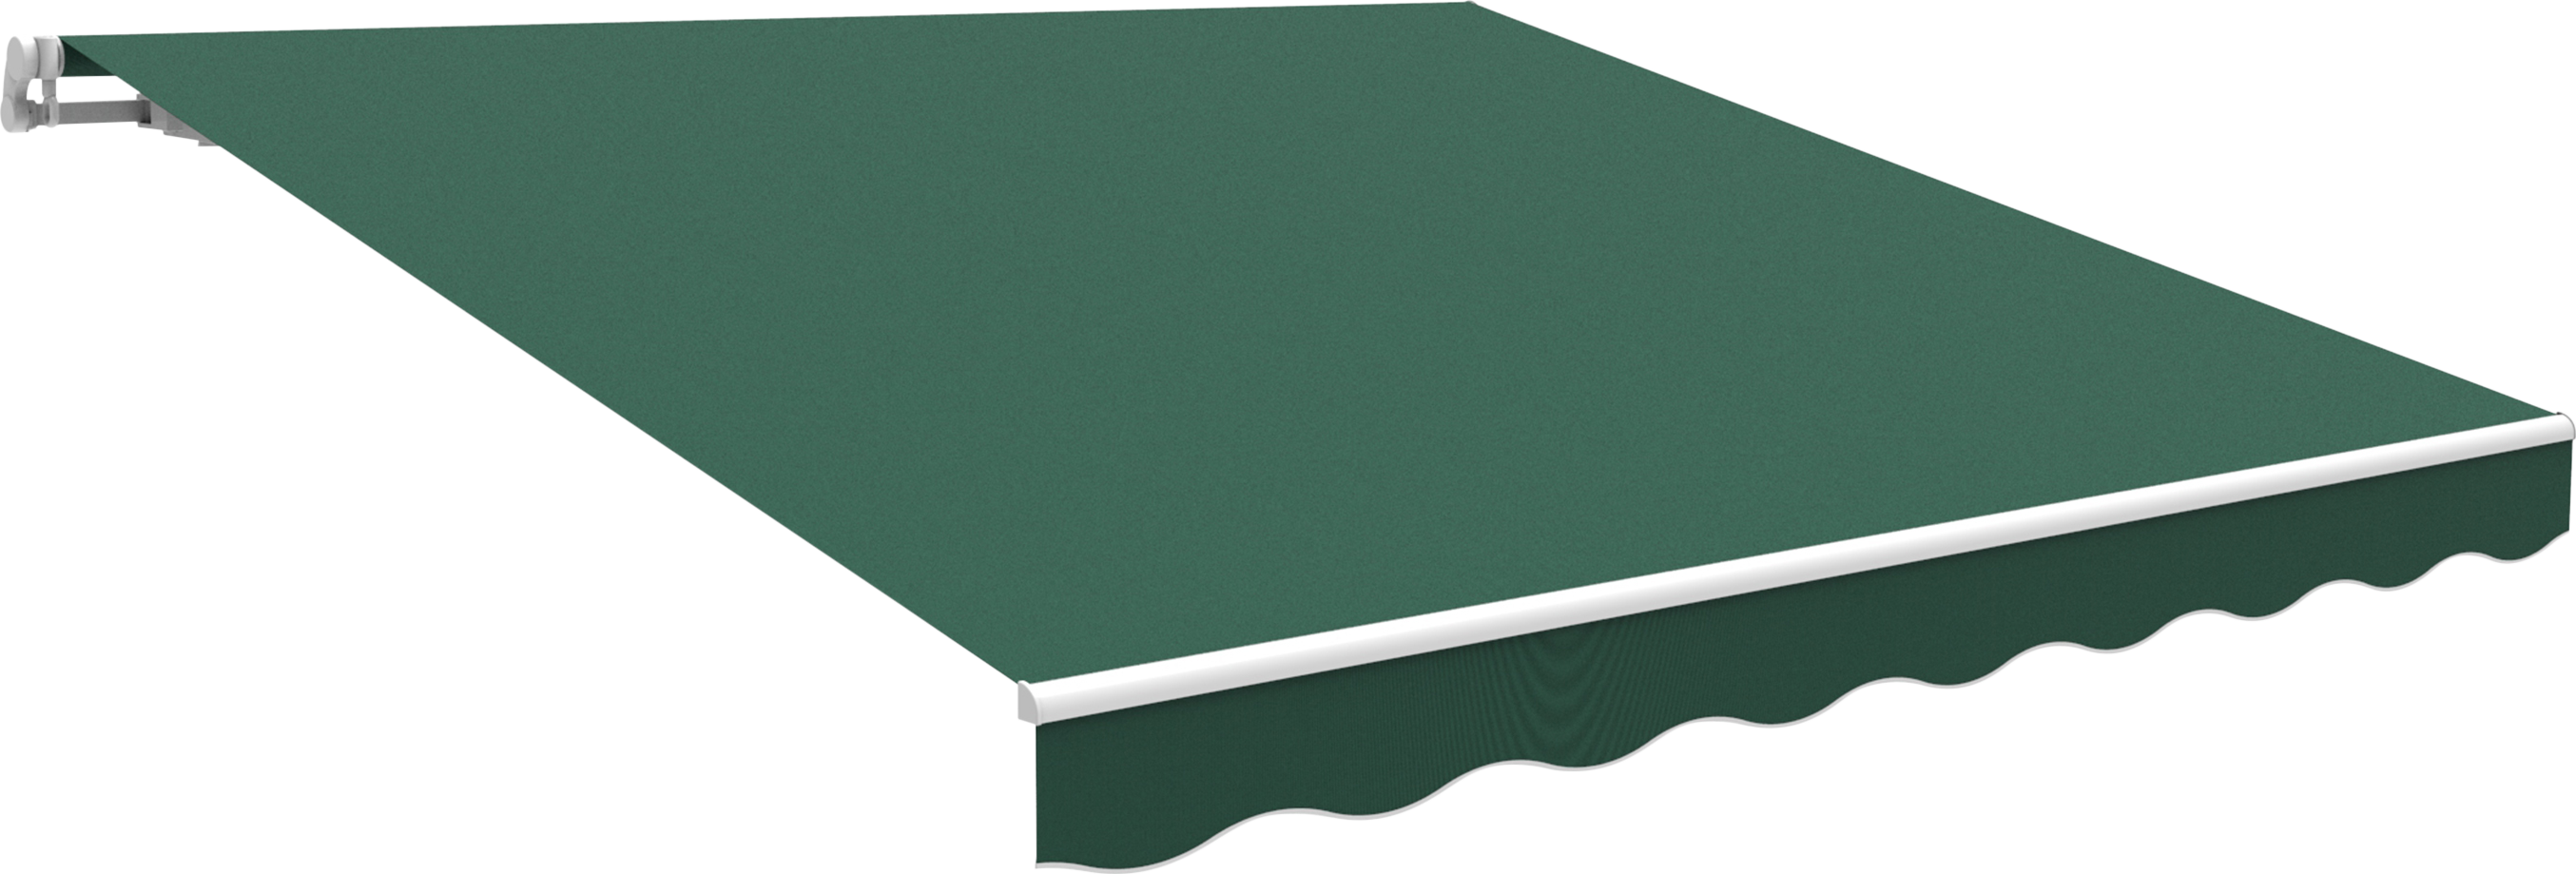 Tela políester essencial verde para toldo en kit kronos de 3x2.5 m